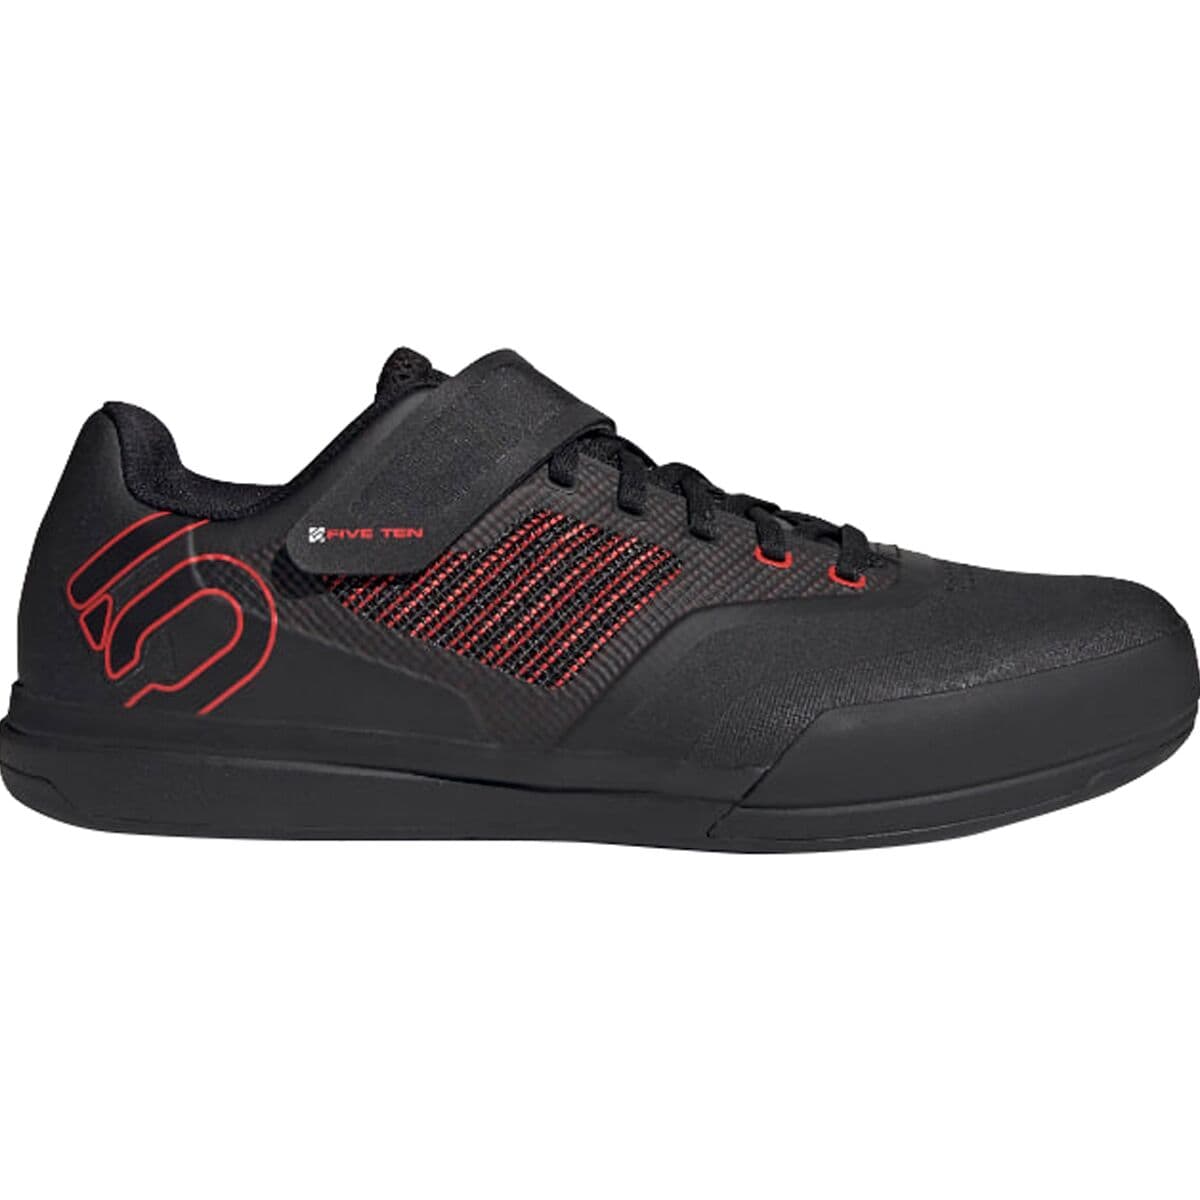 Five Ten Hellcat Pro Cycling Shoe - Men's Red/Core Black/Core Black, 10.5